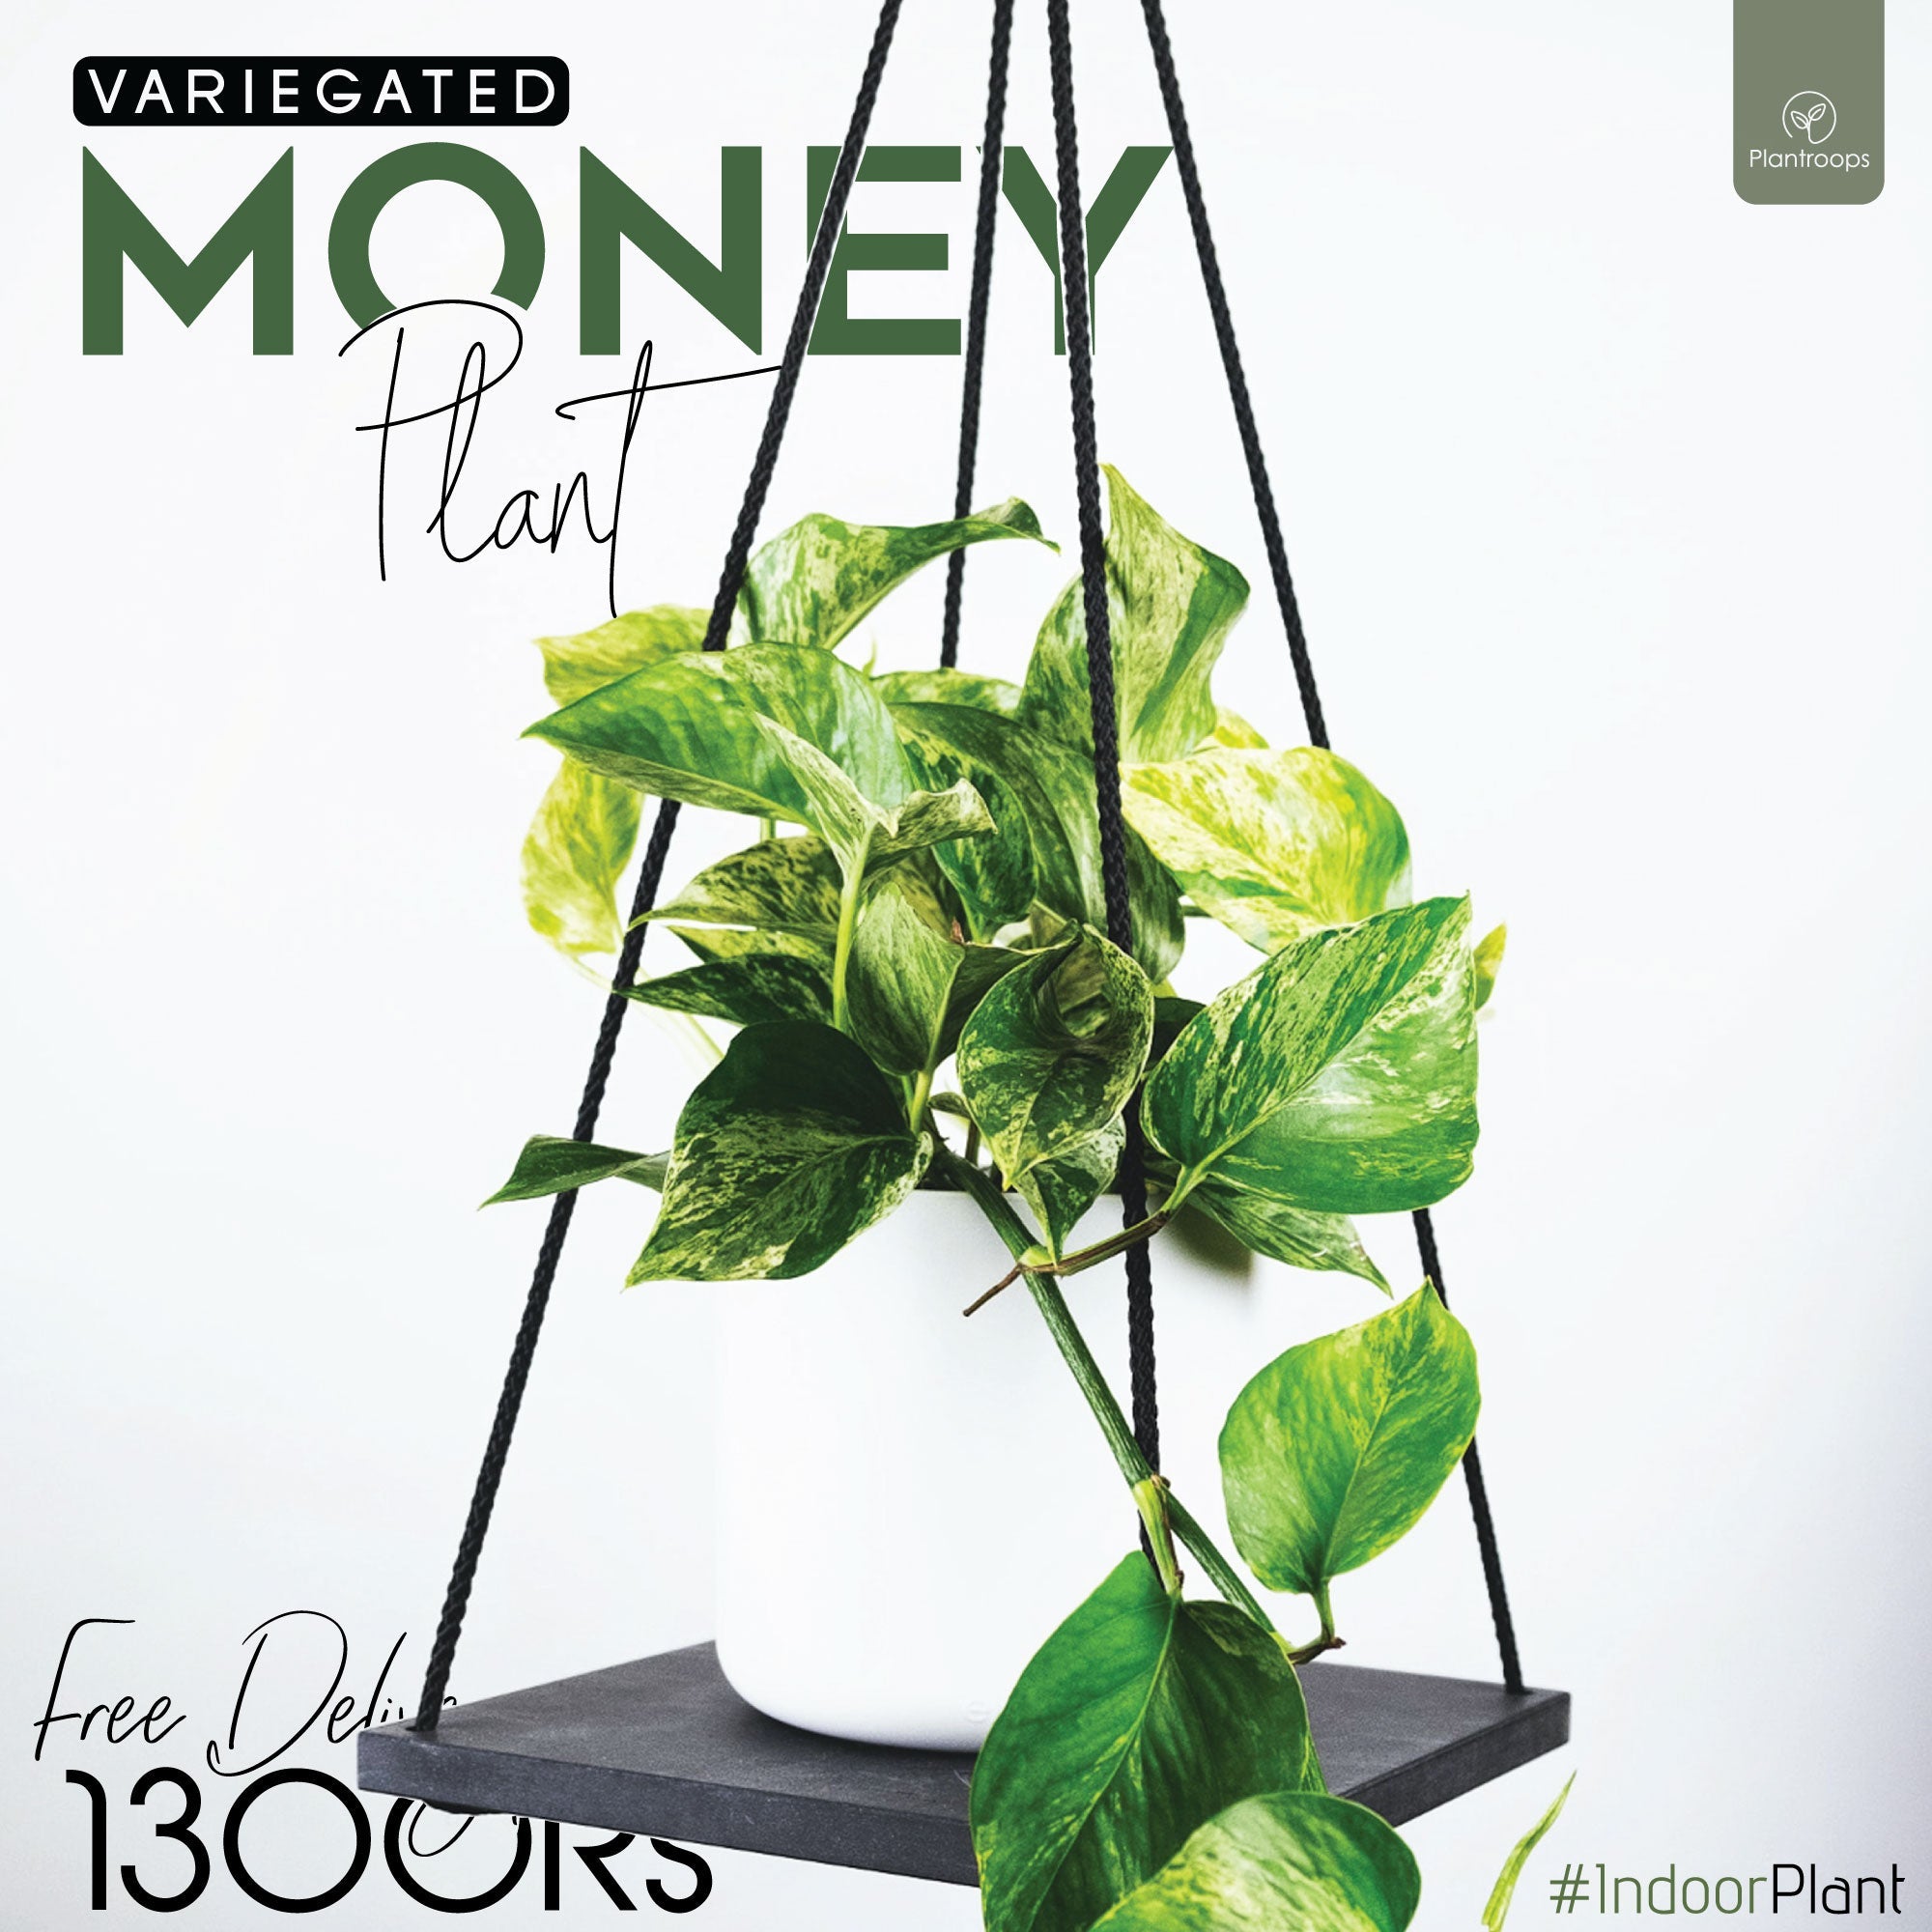 VARIGATED MONEY PLANT